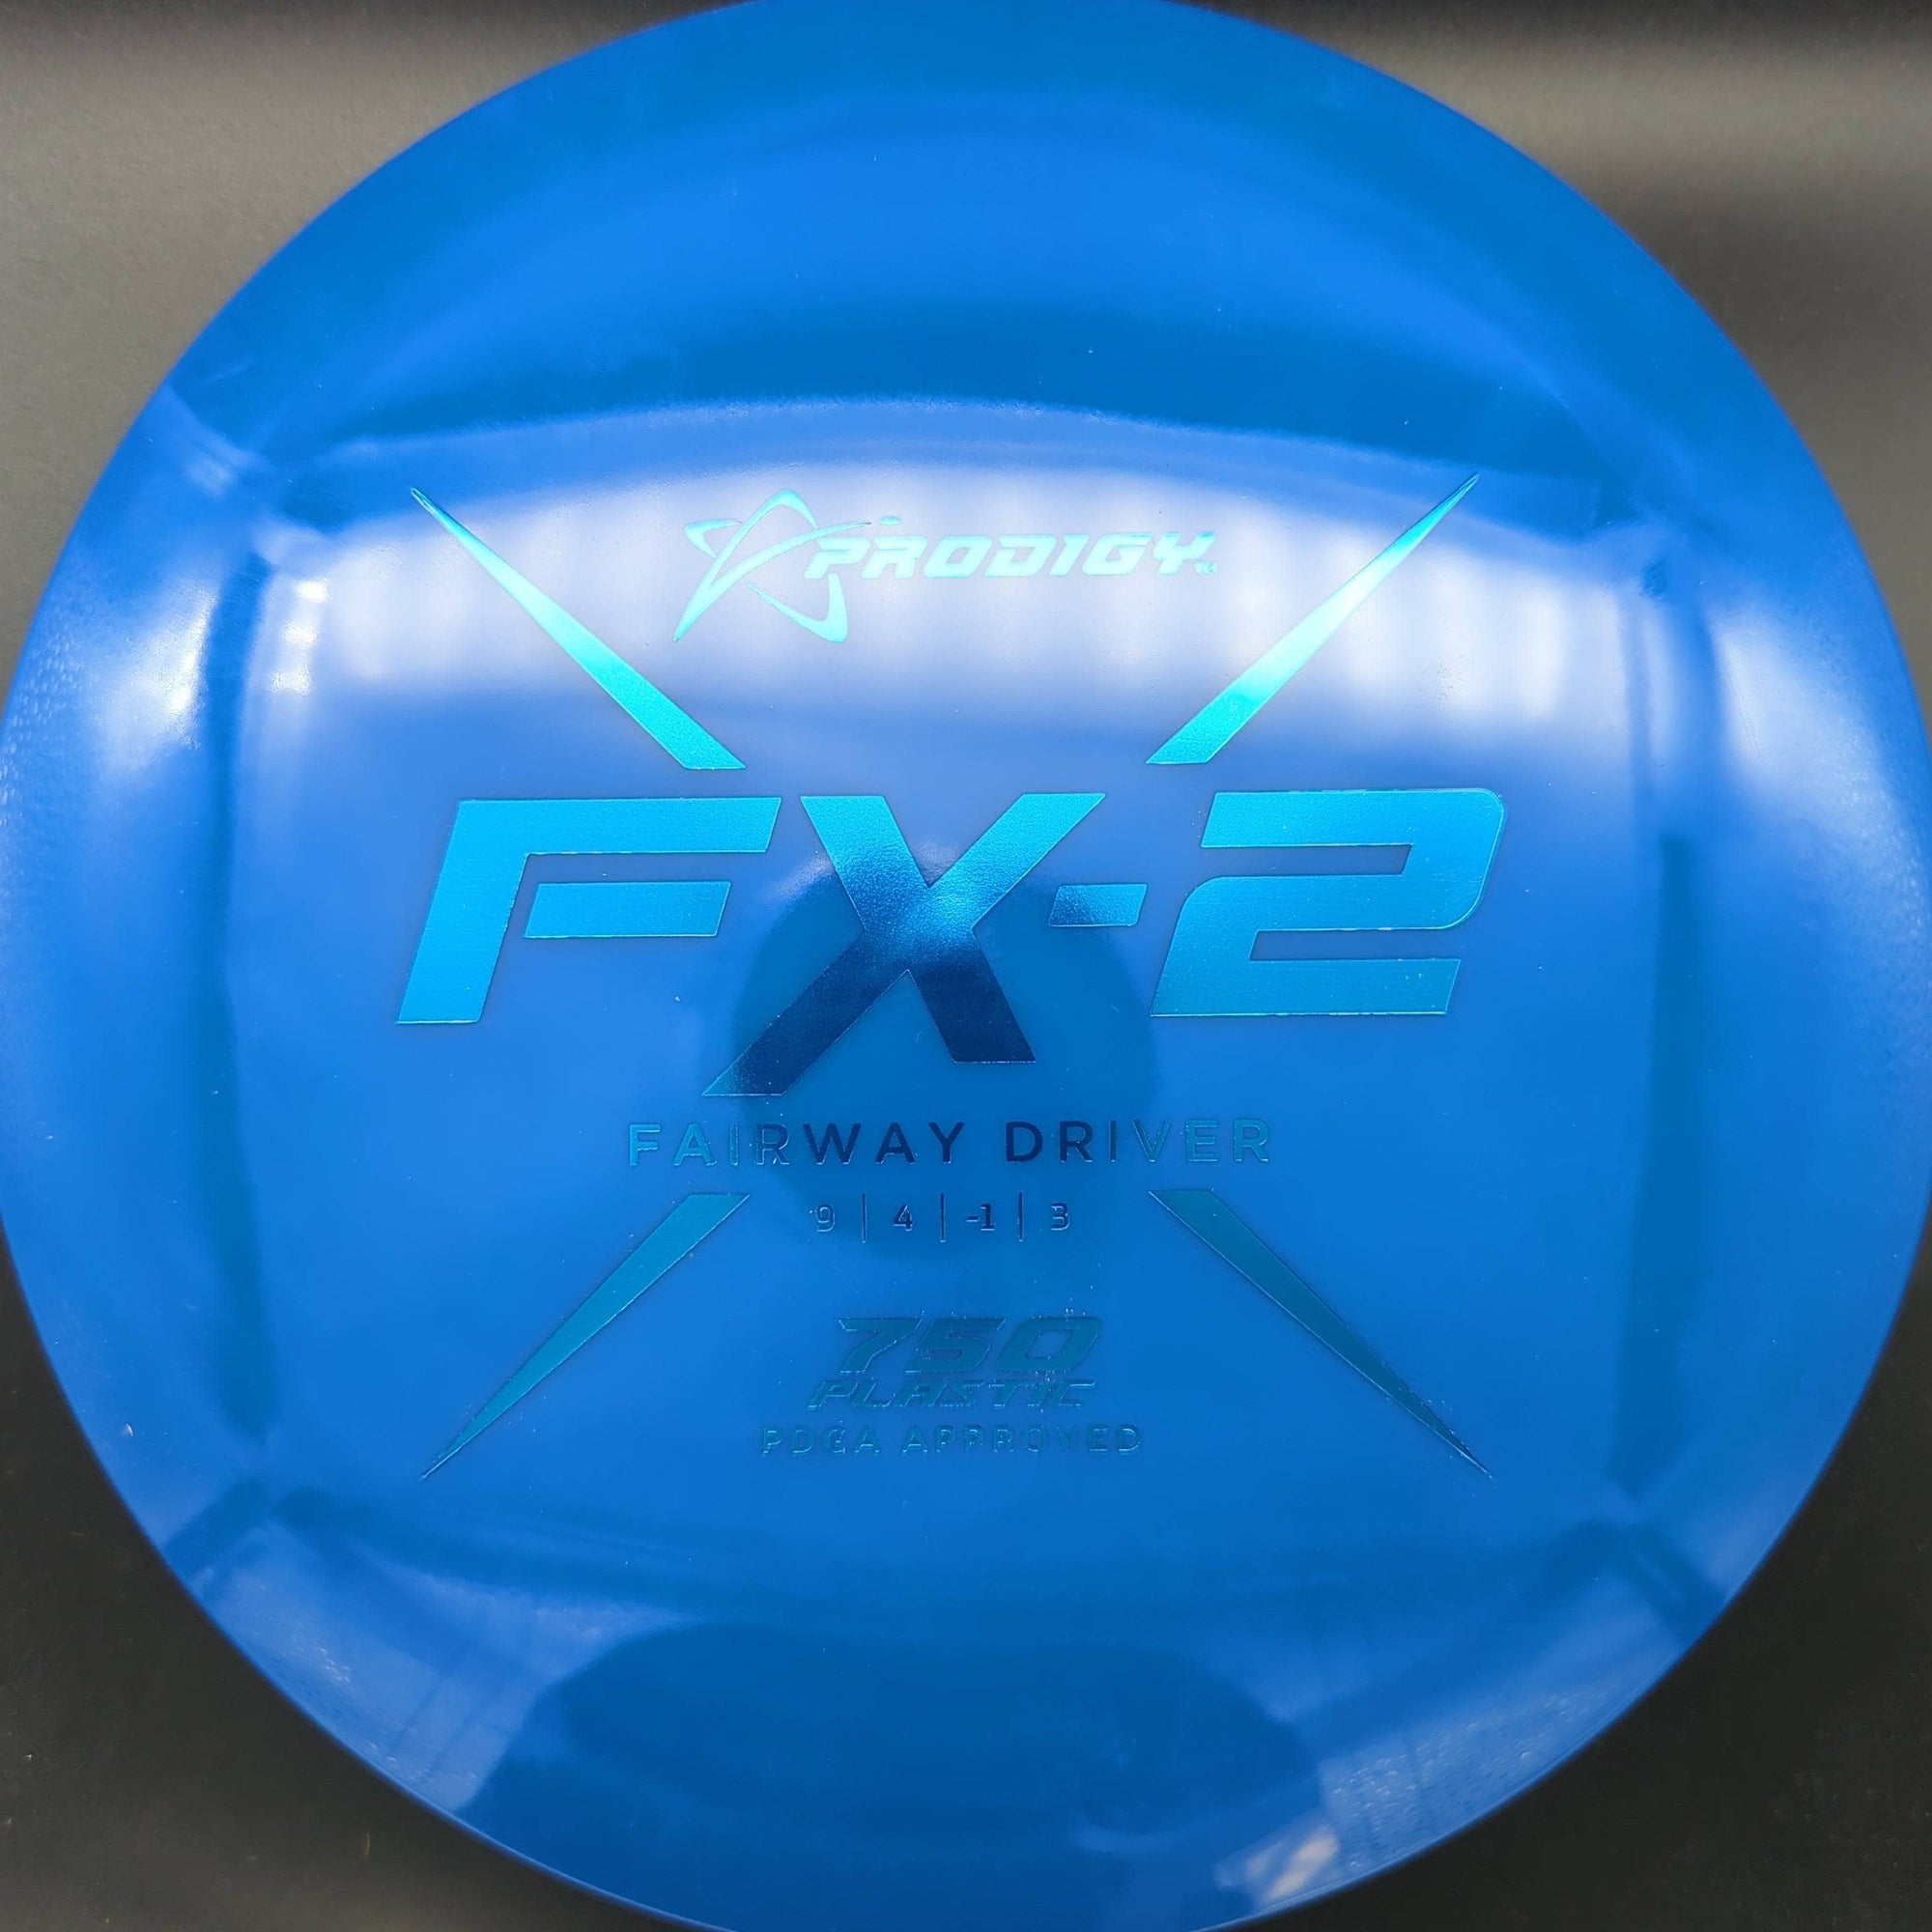 Prodigy Fairway Driver FX2 , 750 Plastic